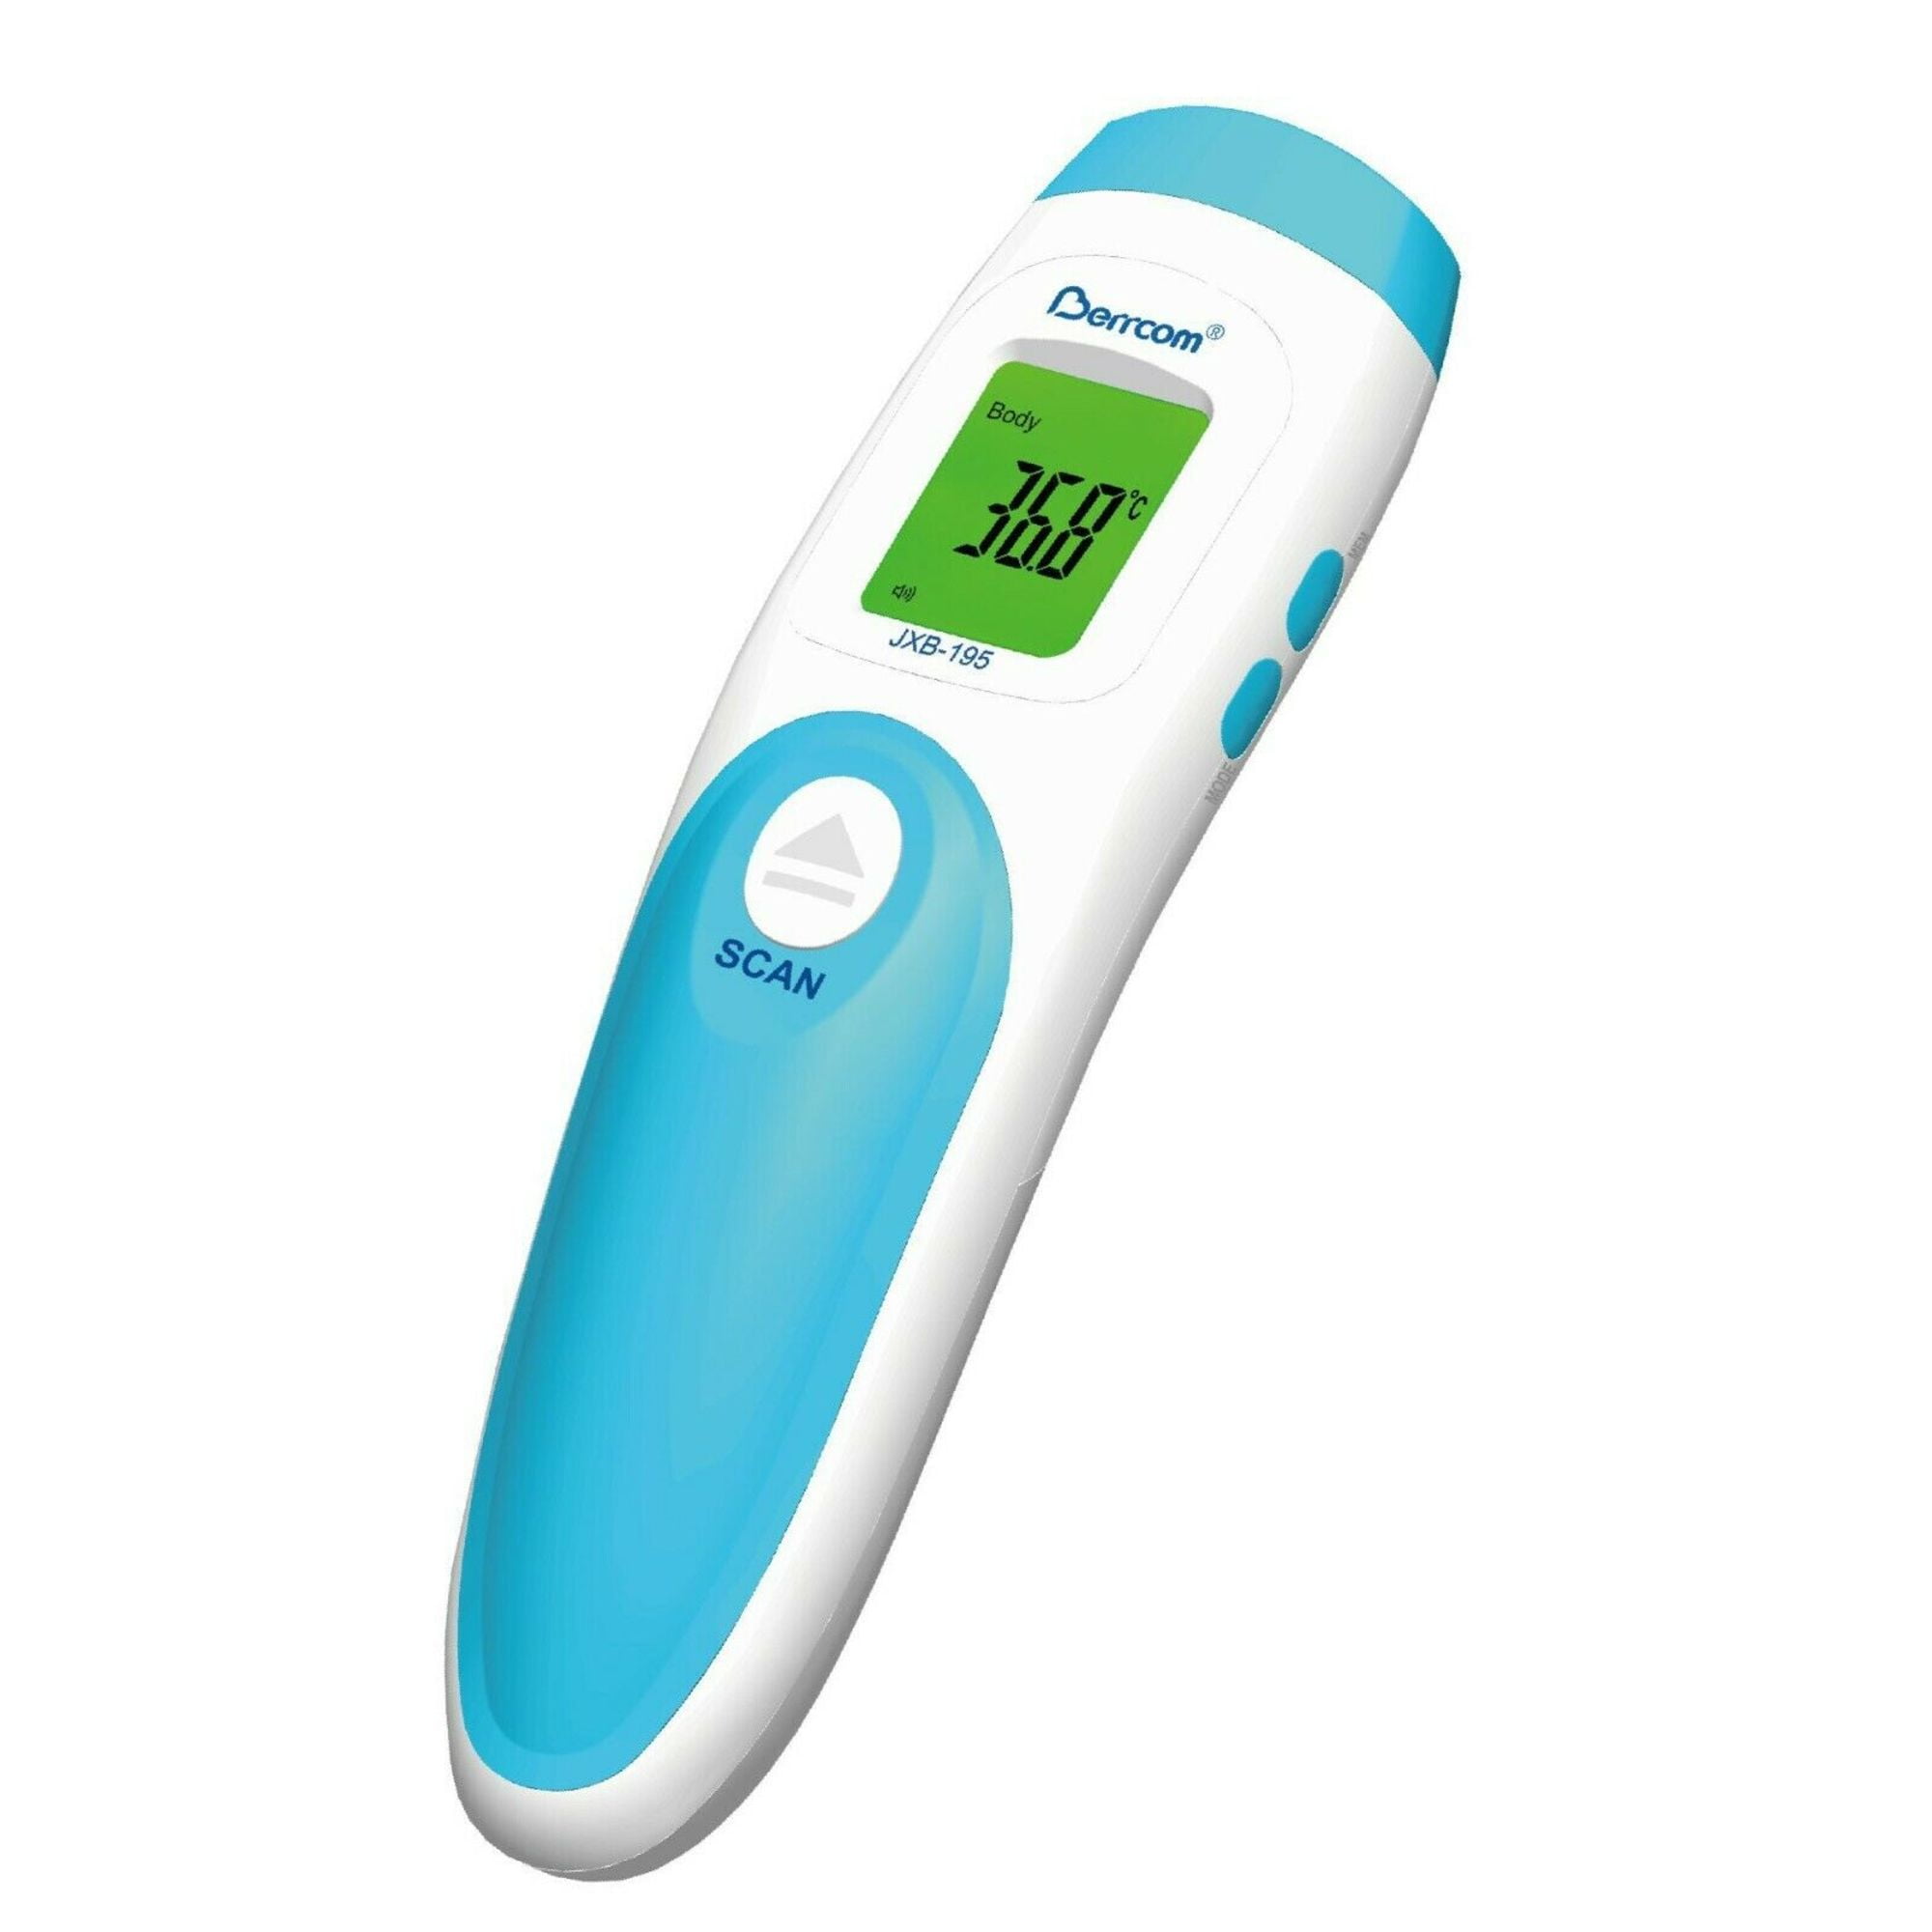 Buy KIZEN Infrared Thermometer (NOT for Humans) - LaserPro LP300